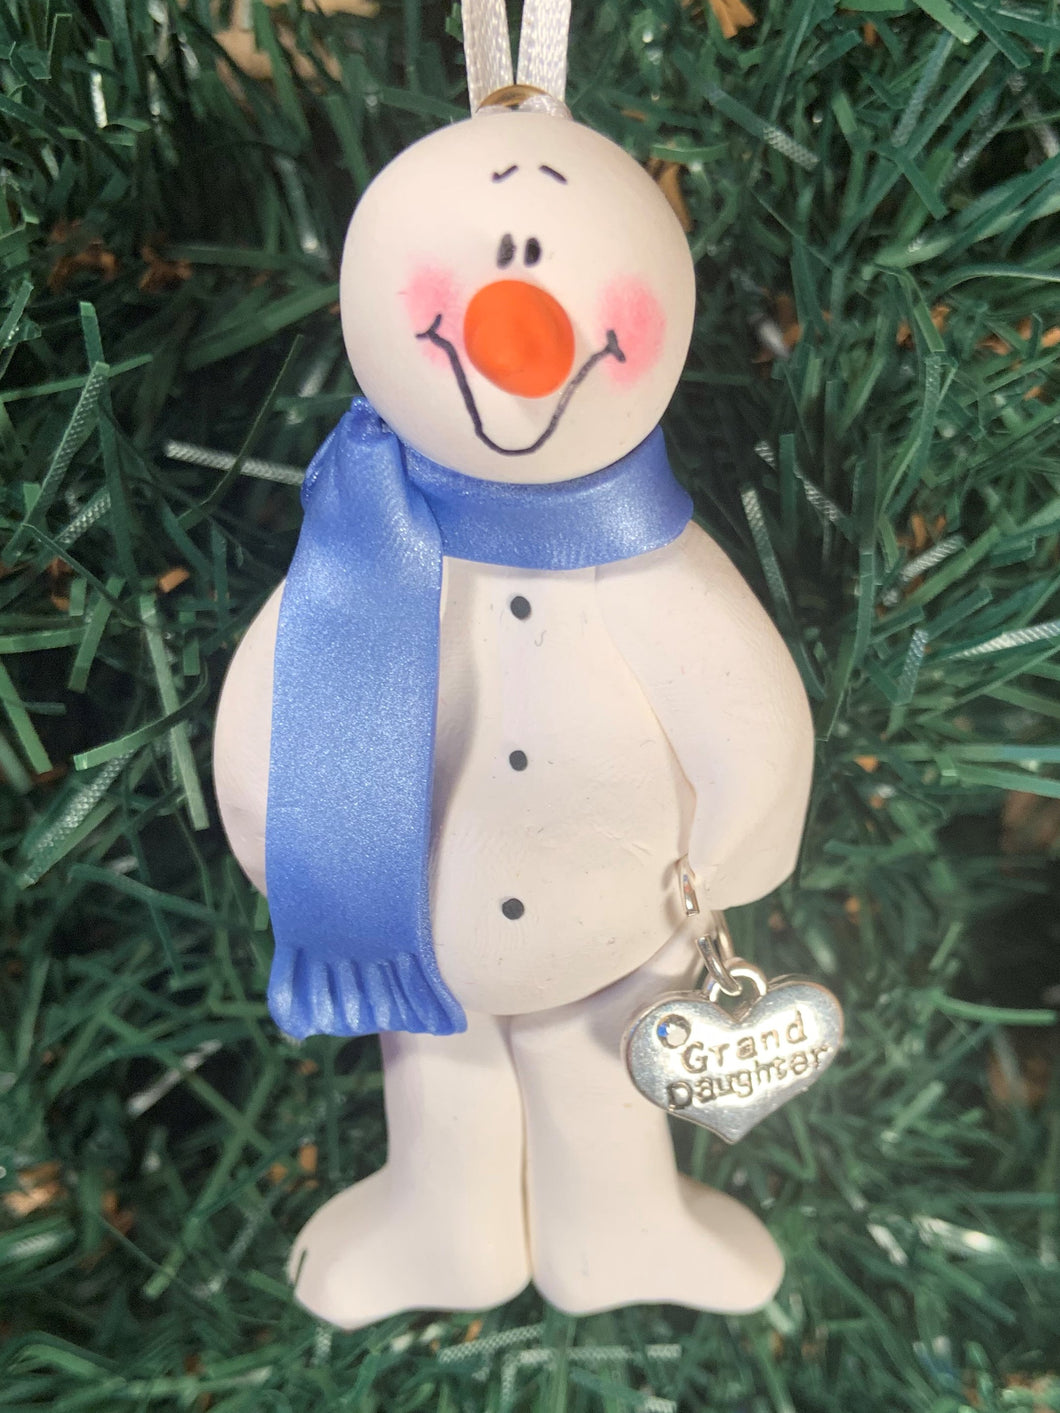 Grand Daughter Snowman Tree Ornament